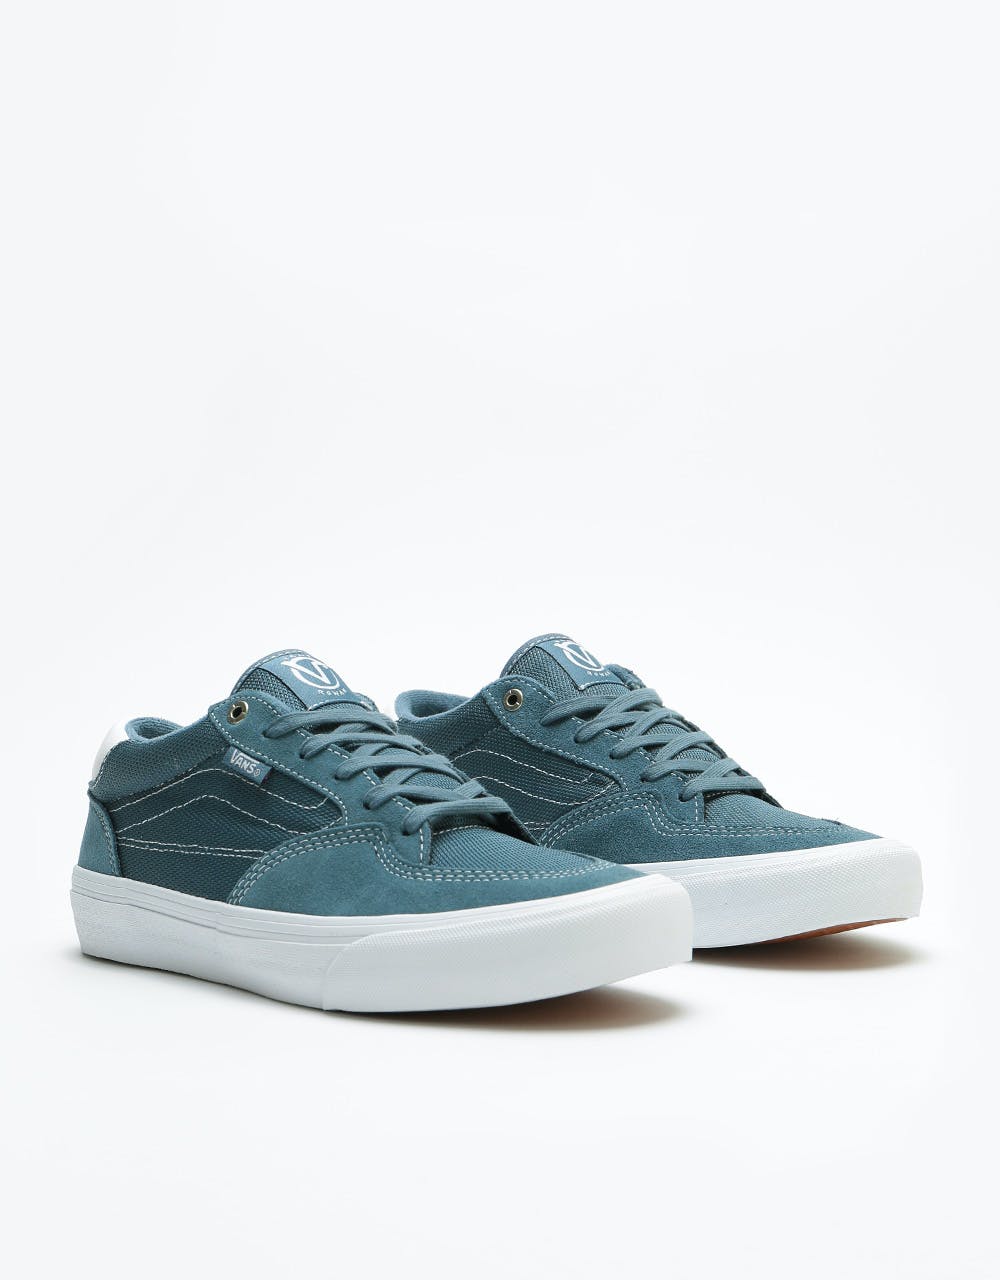 Vans Rowan Pro Skate Shoes - (Mirage) Blue/White